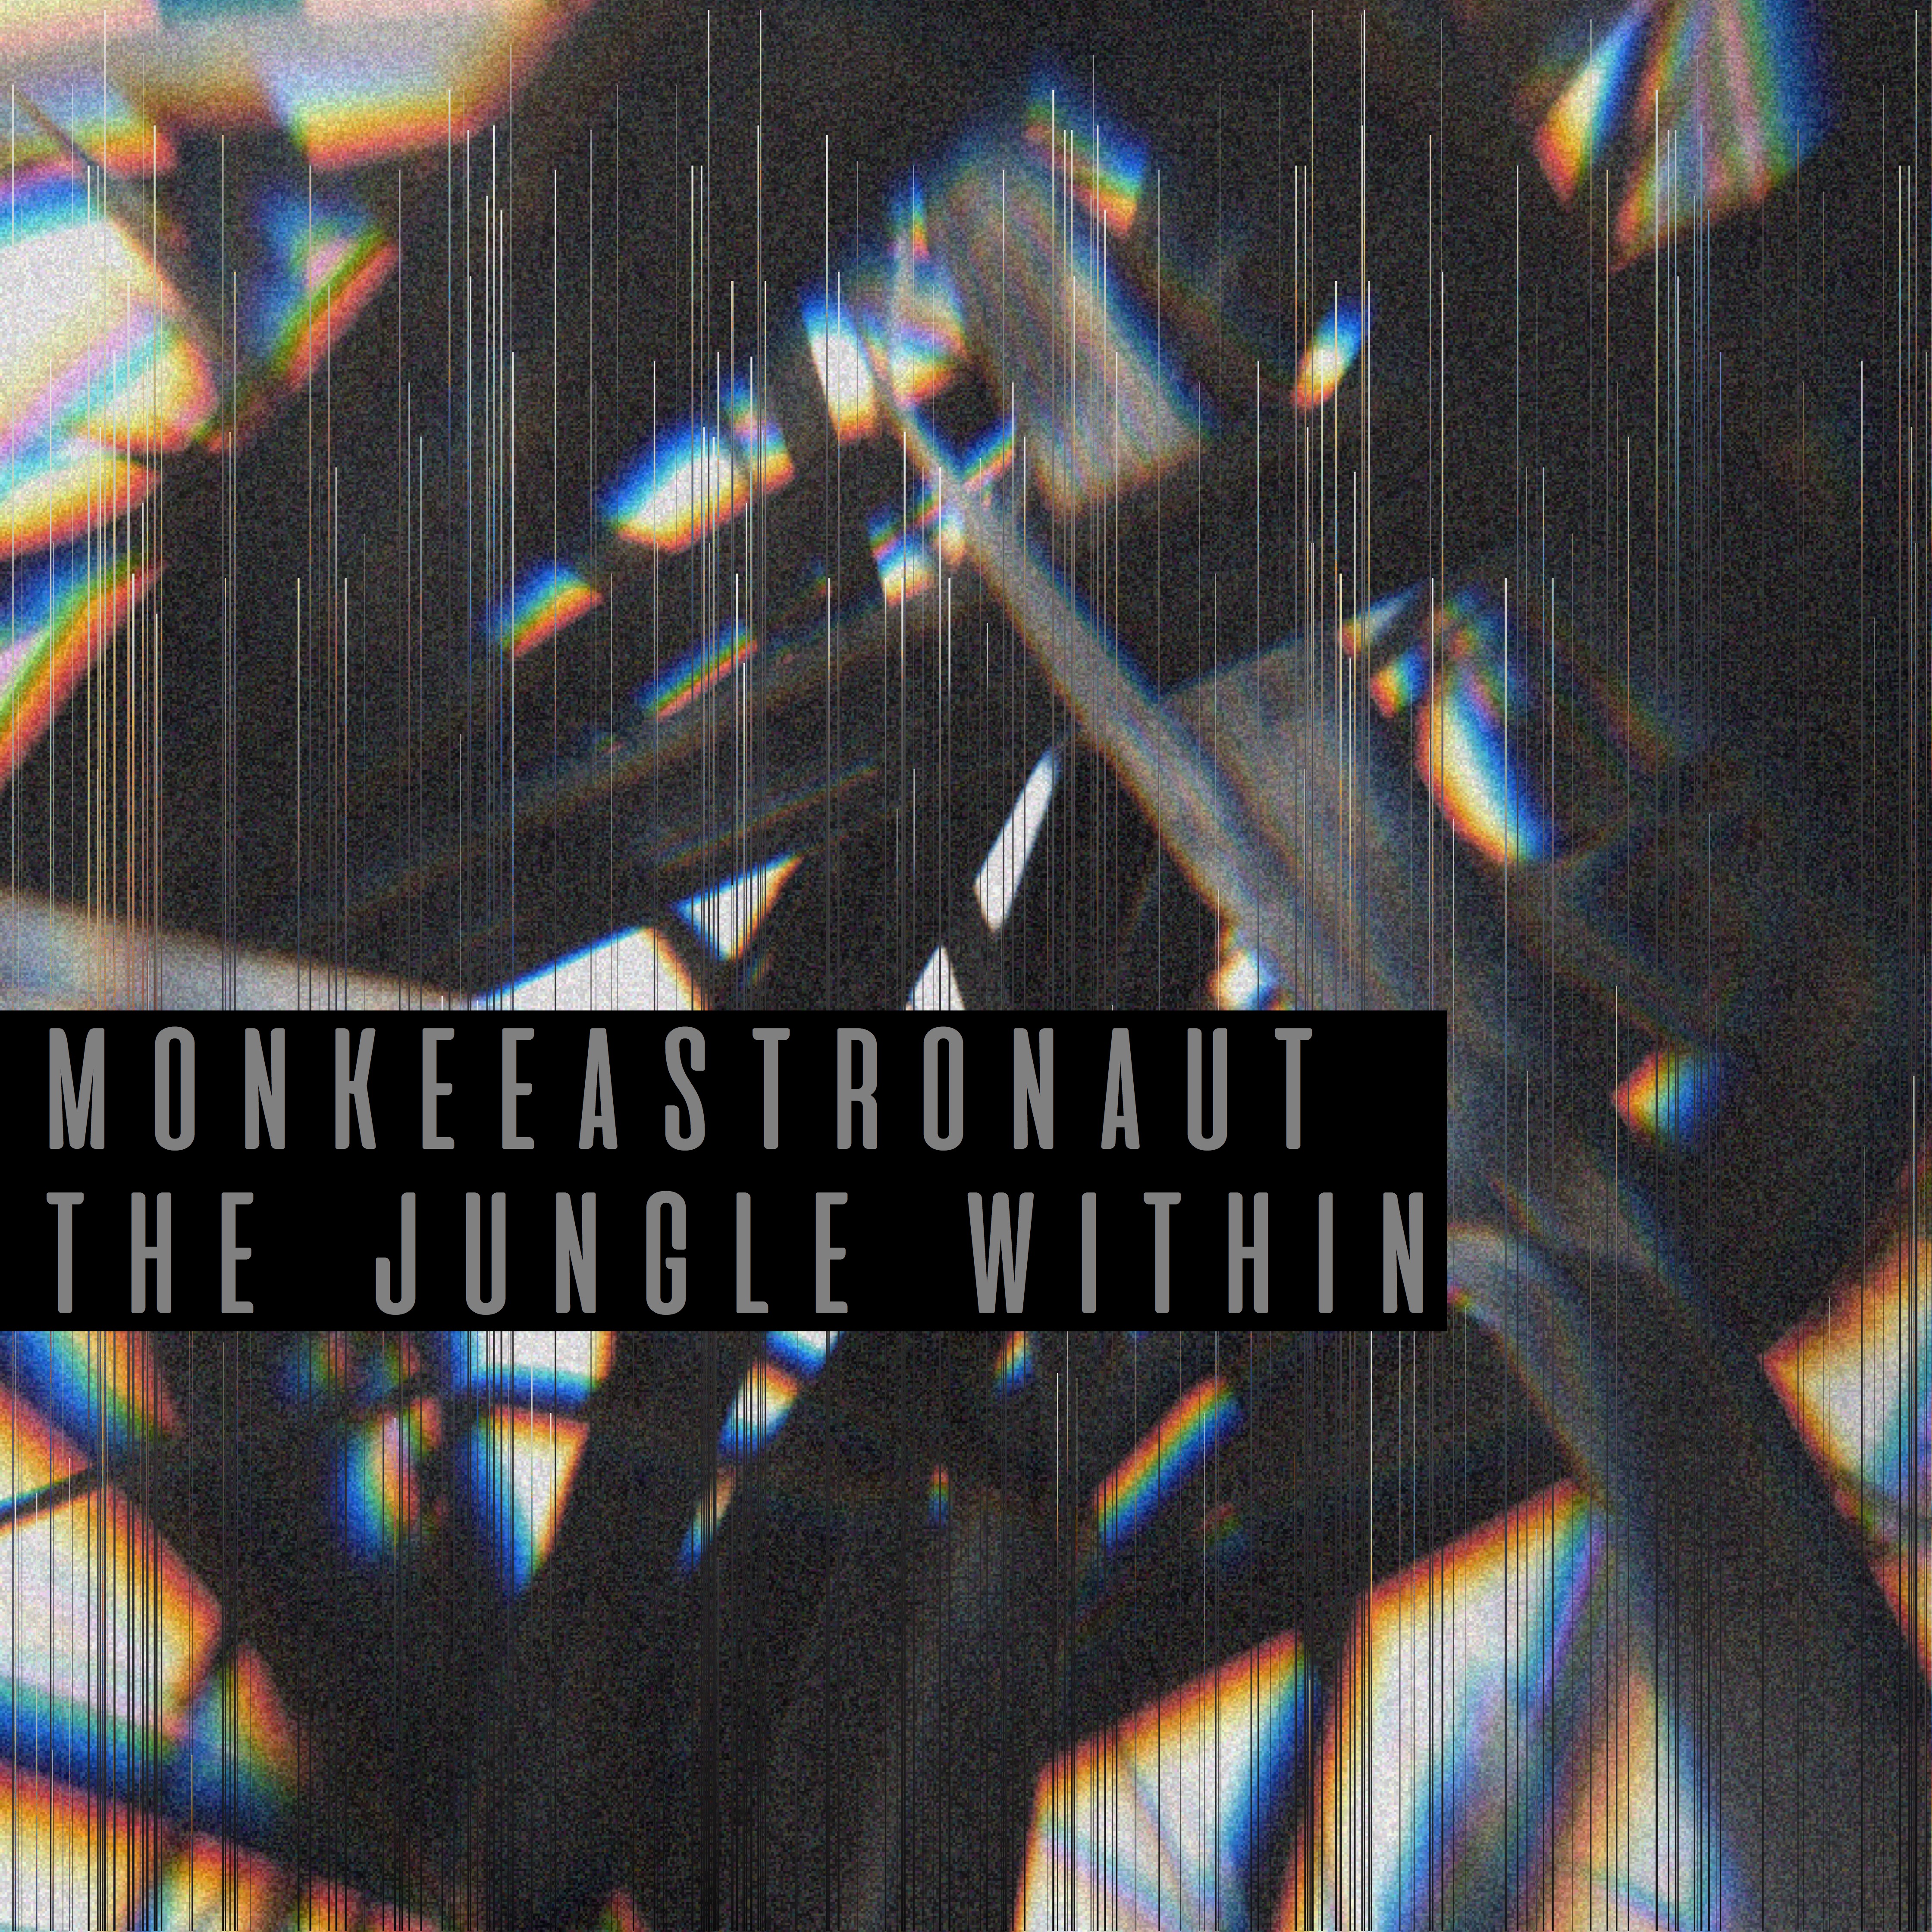 Monkeeastronaut – The Jungle Within